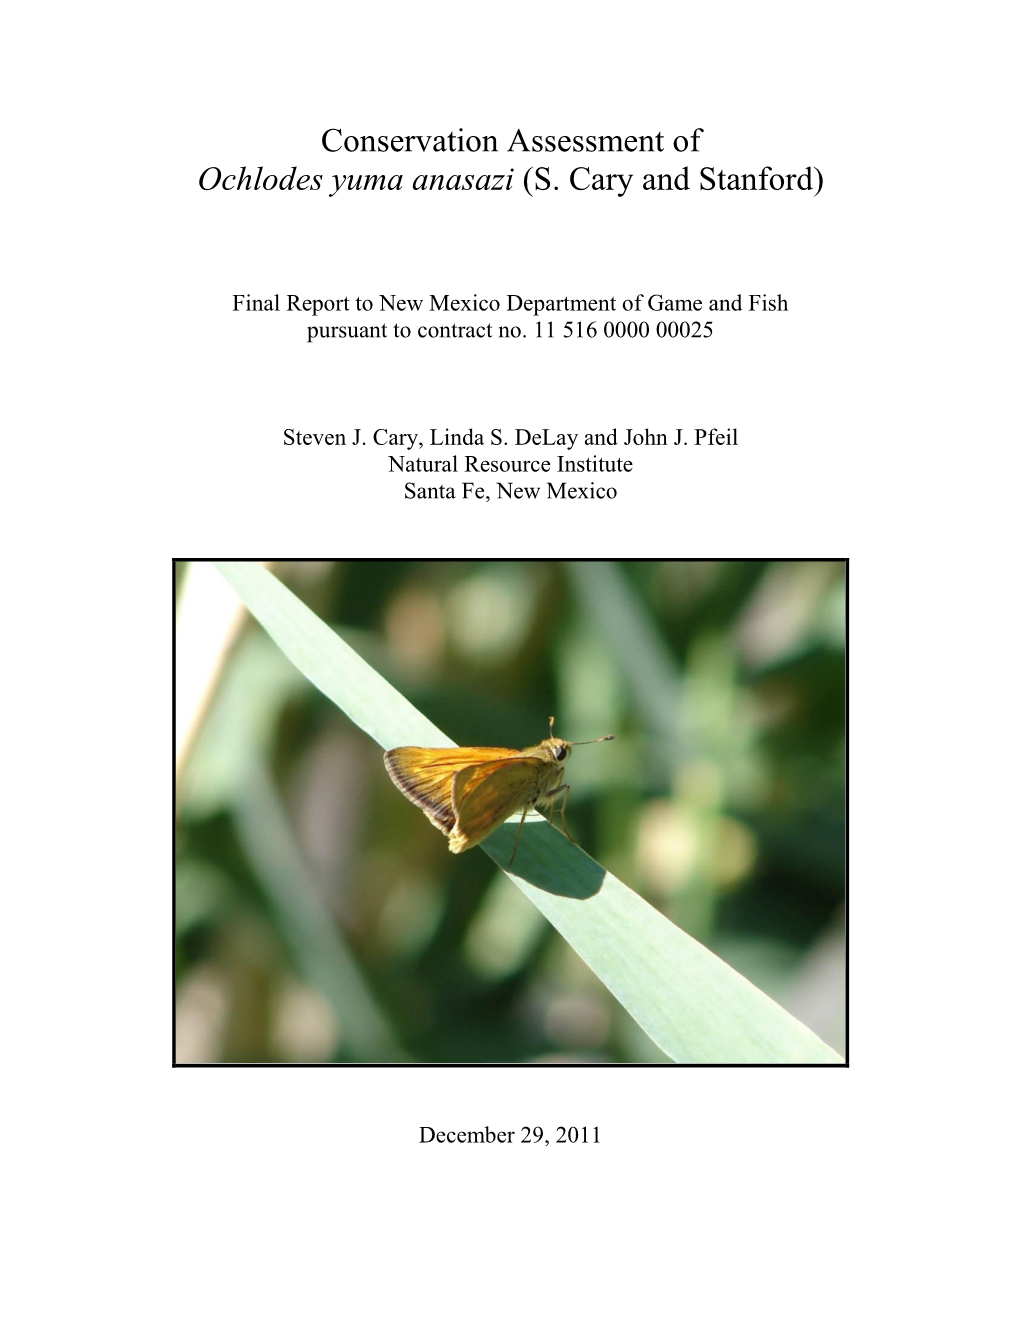 Conservation Status of Ochlodes Yuma Anasazi Cary and Stanford